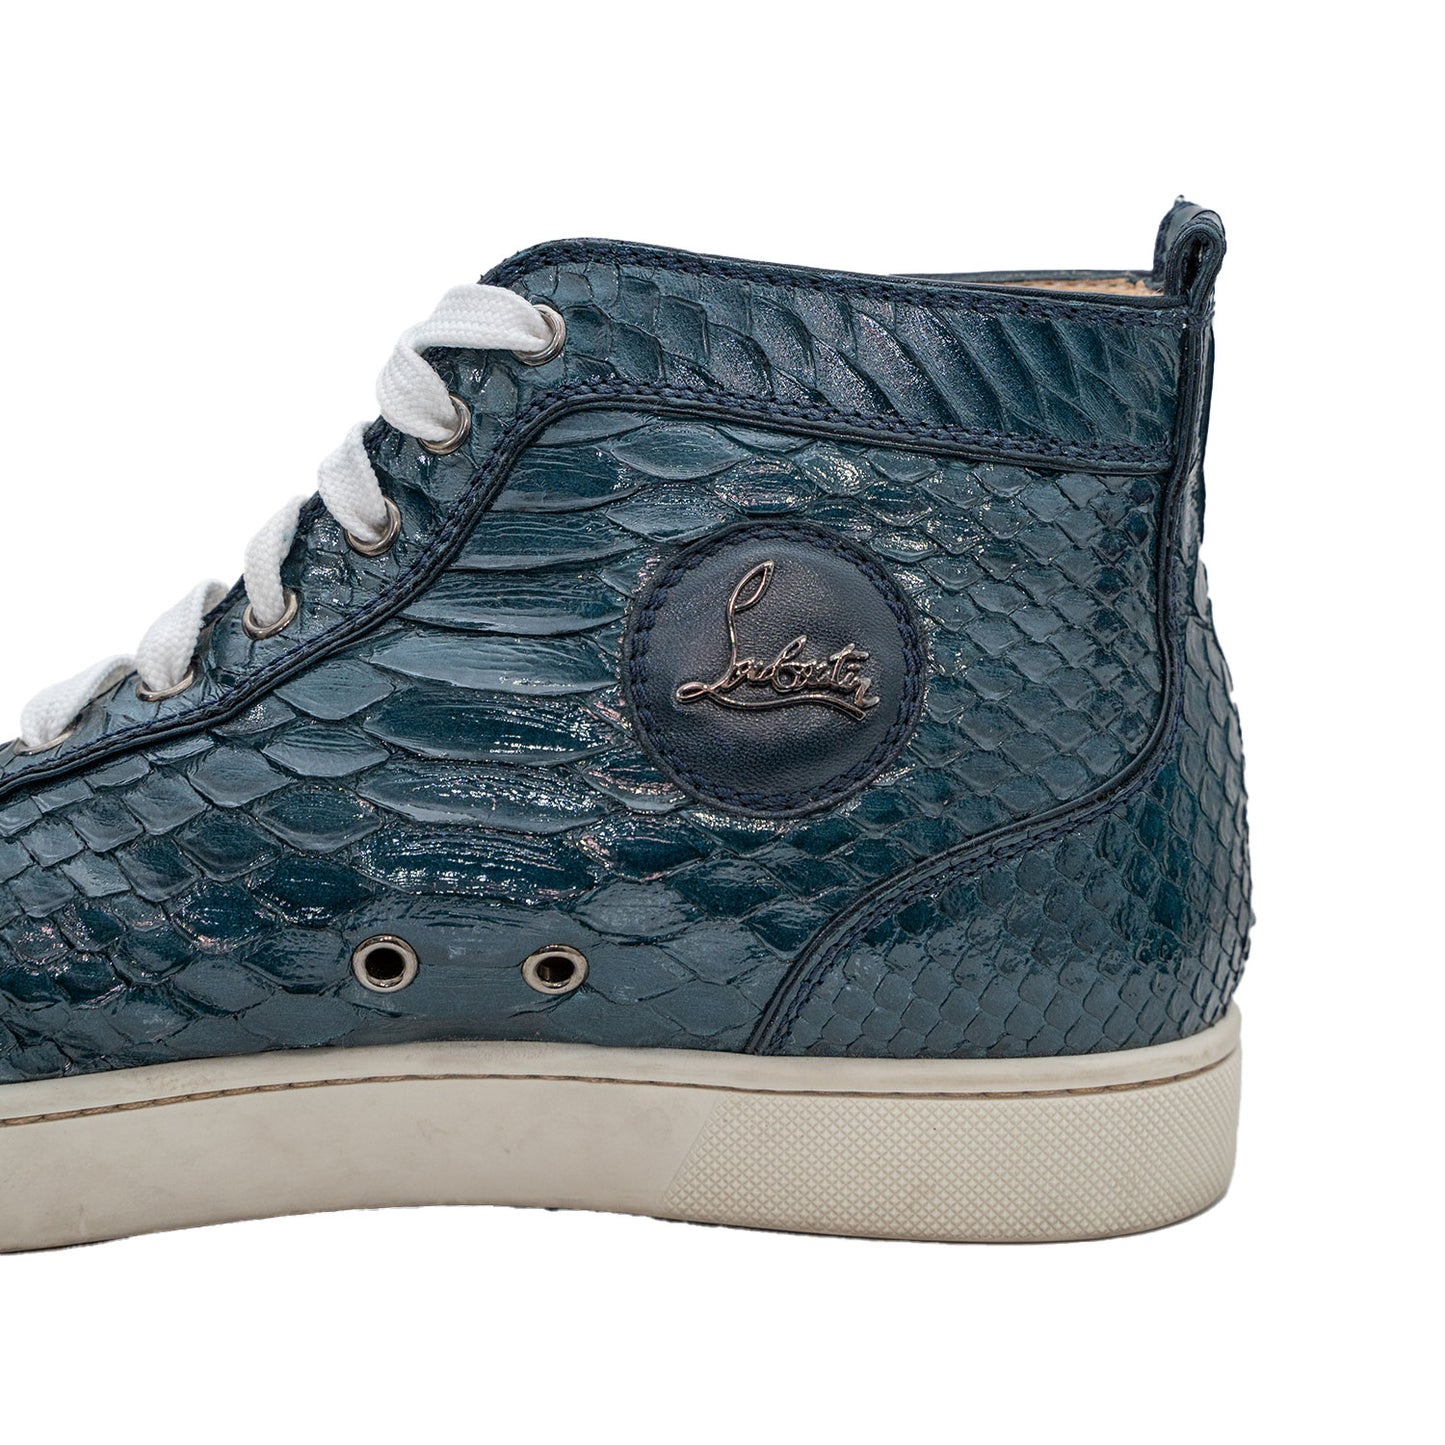 Christian Louboutin Men's Patent Python Leather Mid-Top Sneaker